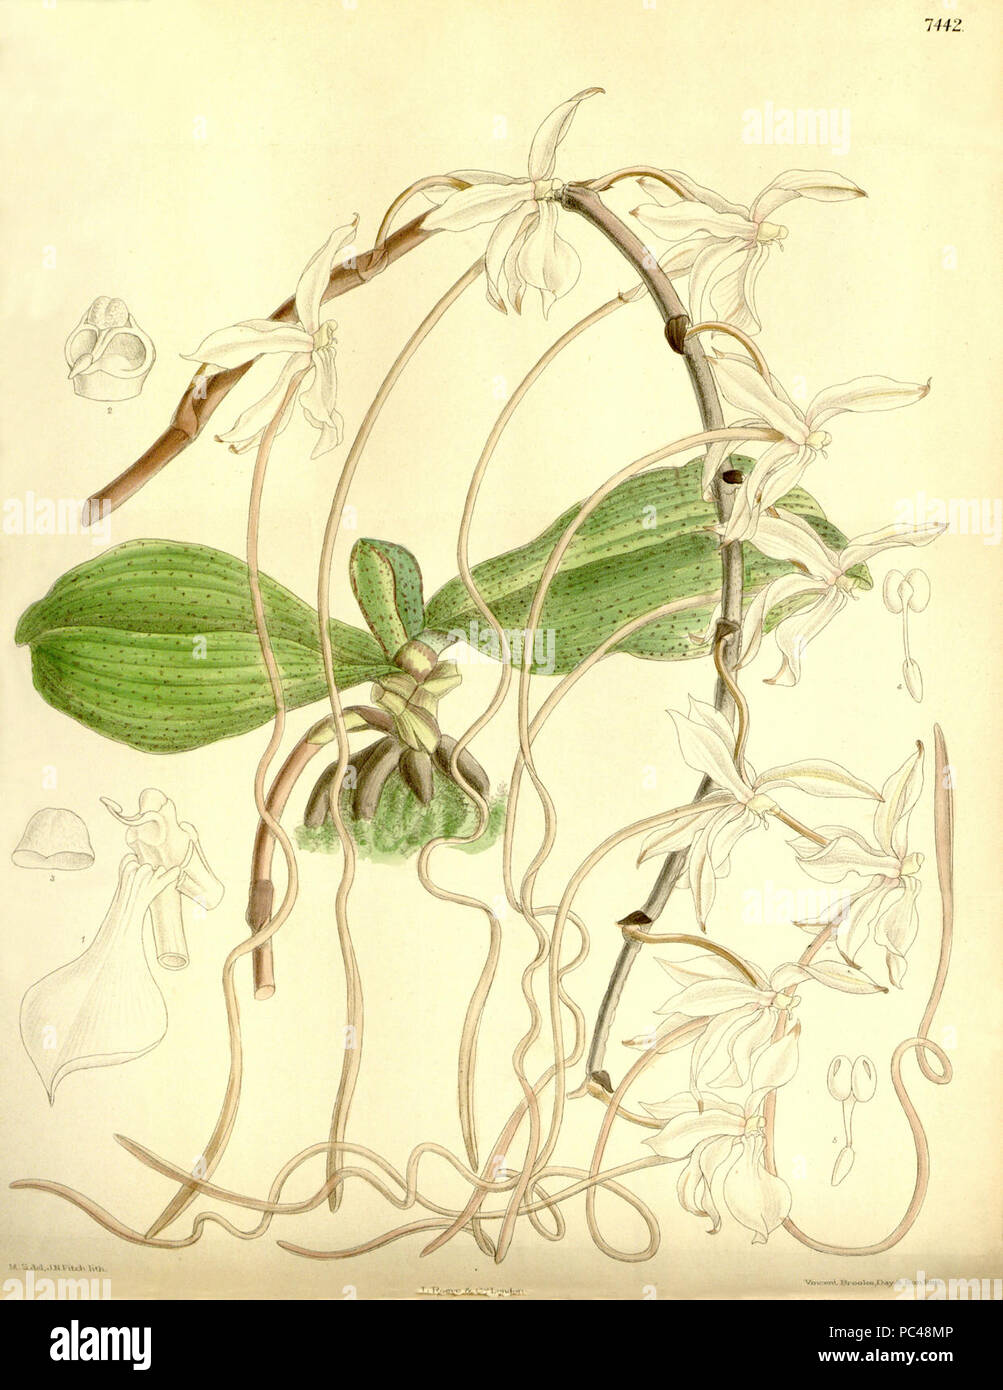 Aerangis kotschyana (as Angraecum kotschyi) - Curtis' 121 (Ser. 3 no. 51) pl. 7442 (1895). Stock Photo